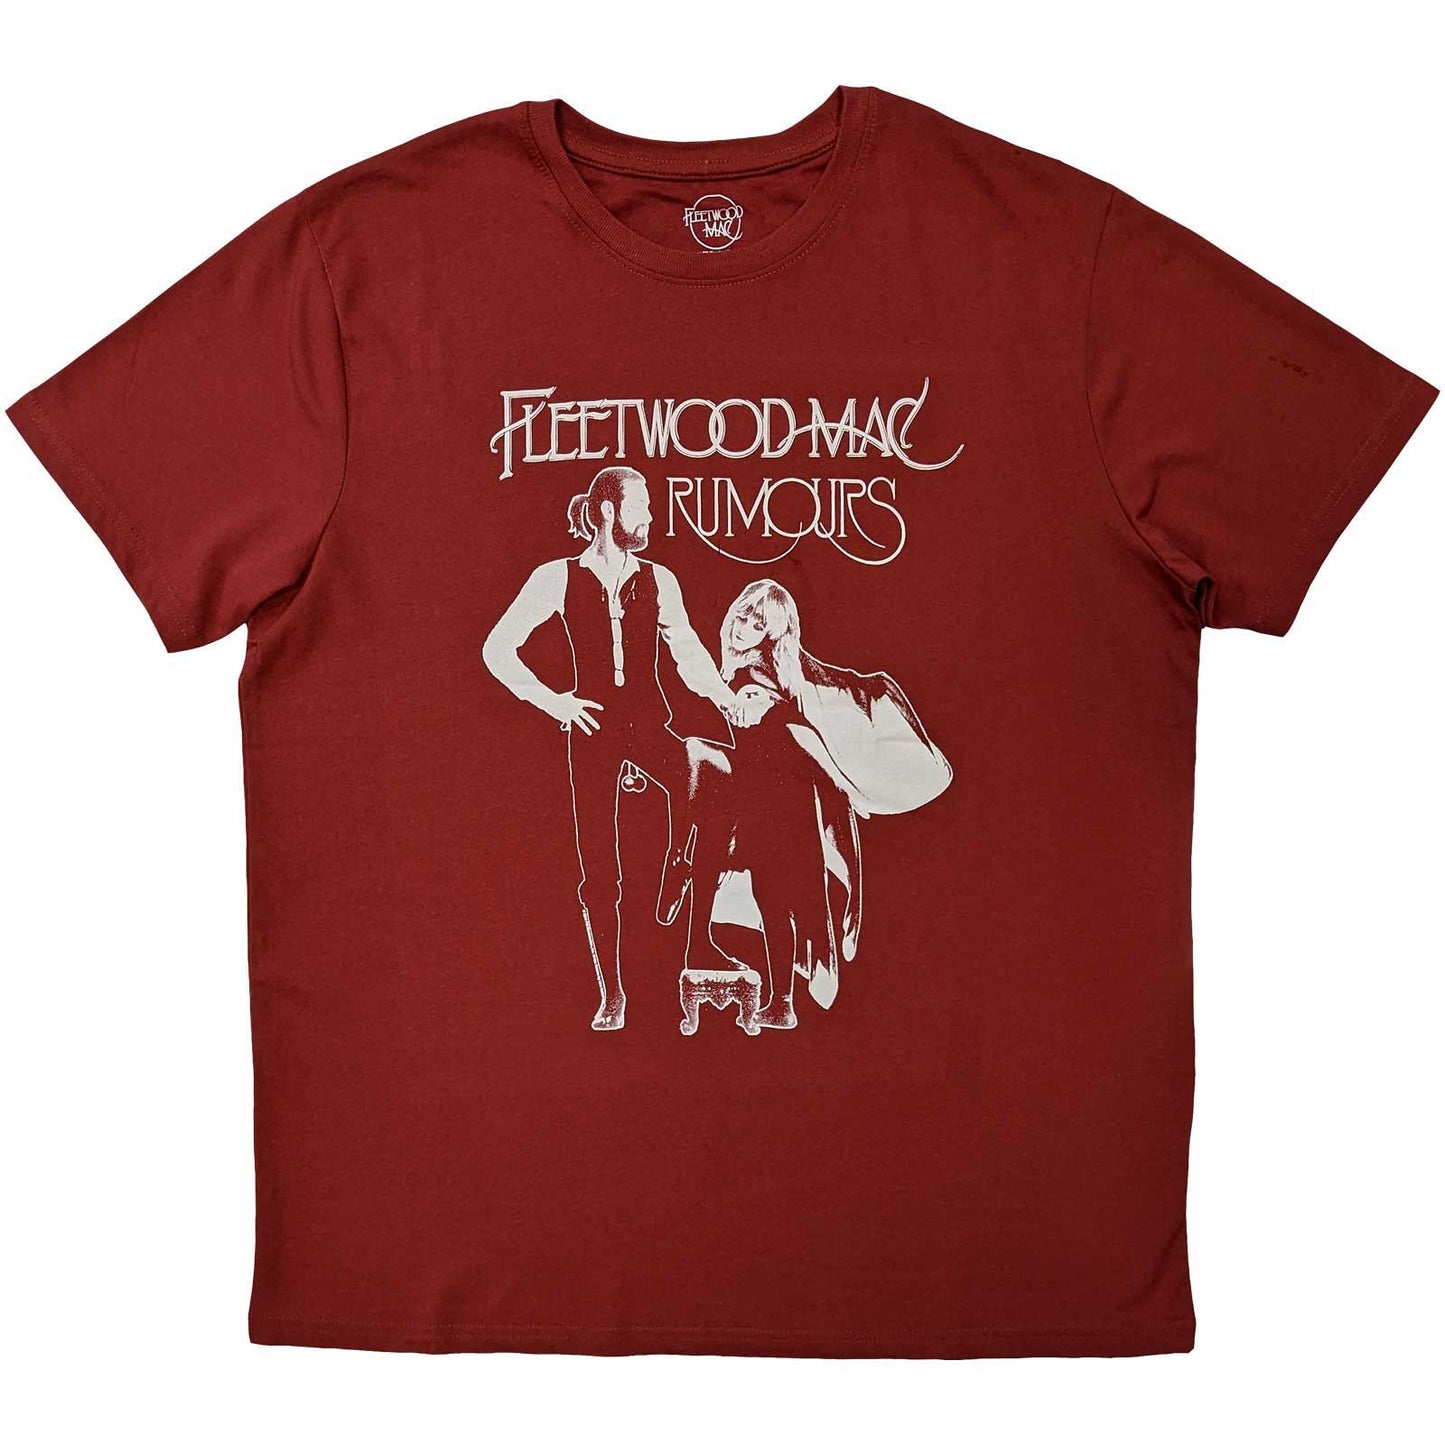 Fleetwood Mac T-Shirt: Rumours